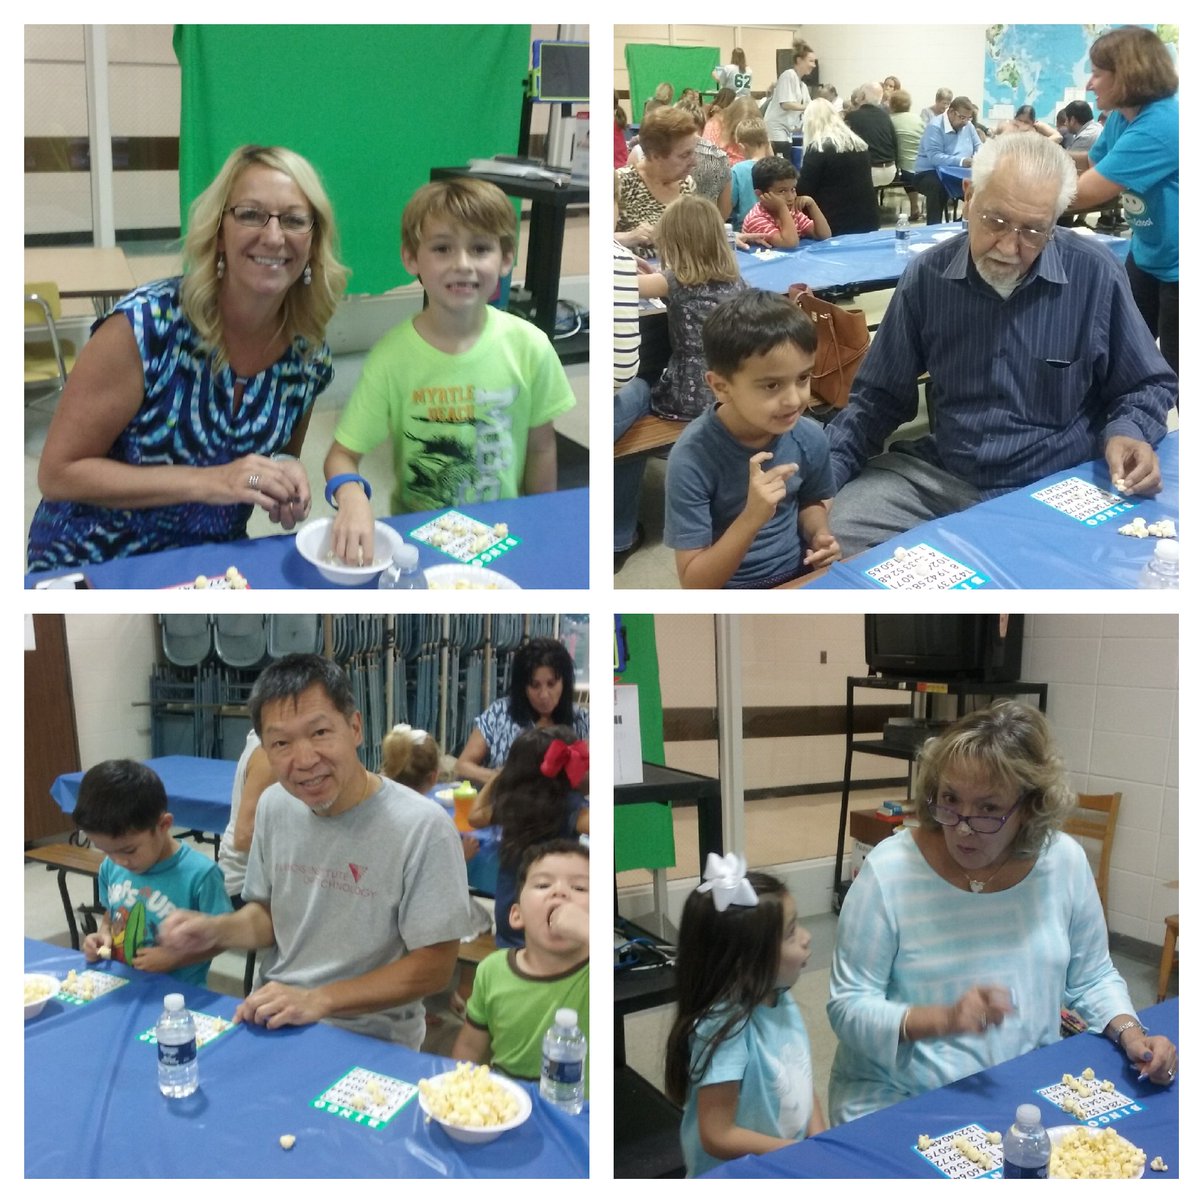 A night of Bingo with Grandparents at #Gower62!  # grandparentlove #KidsDeserveIt #bingofun!